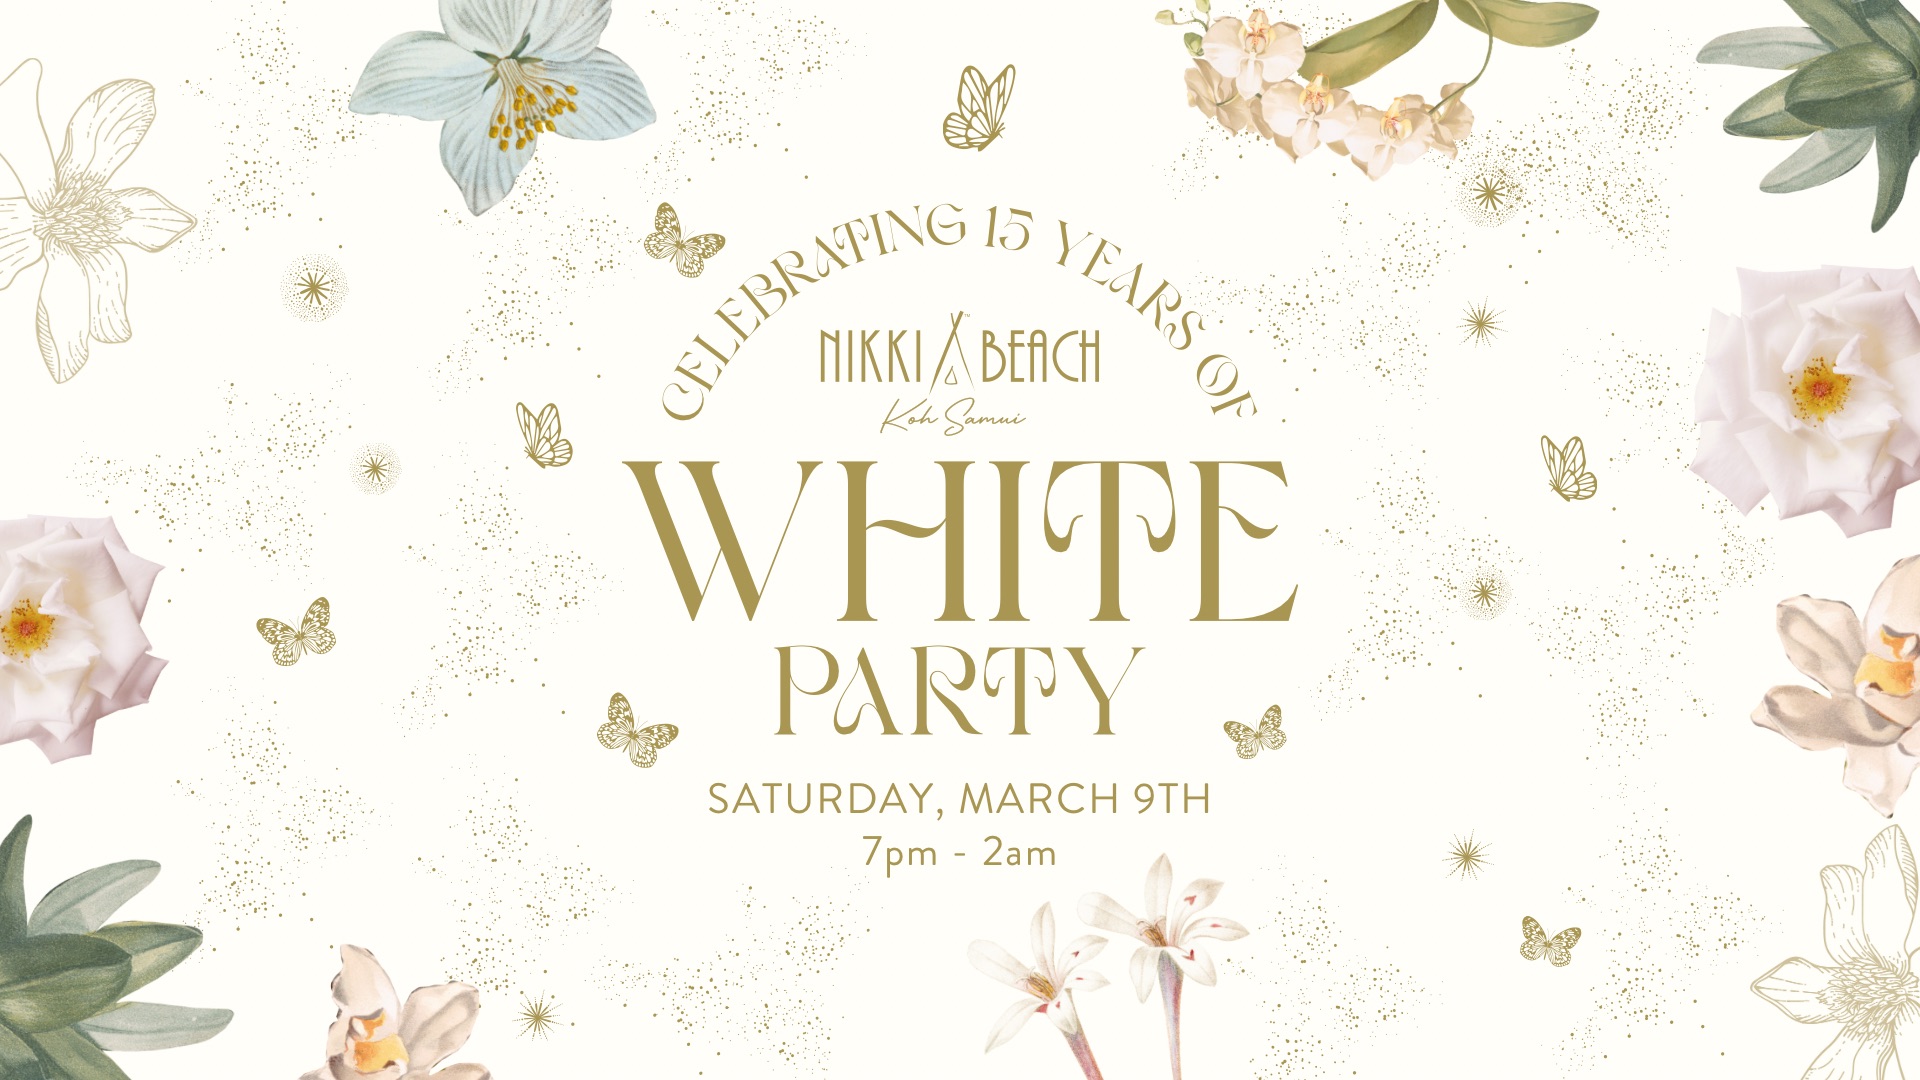 White Party - חוגגים 15 שנים ל- Nikki Beach Koh Samui